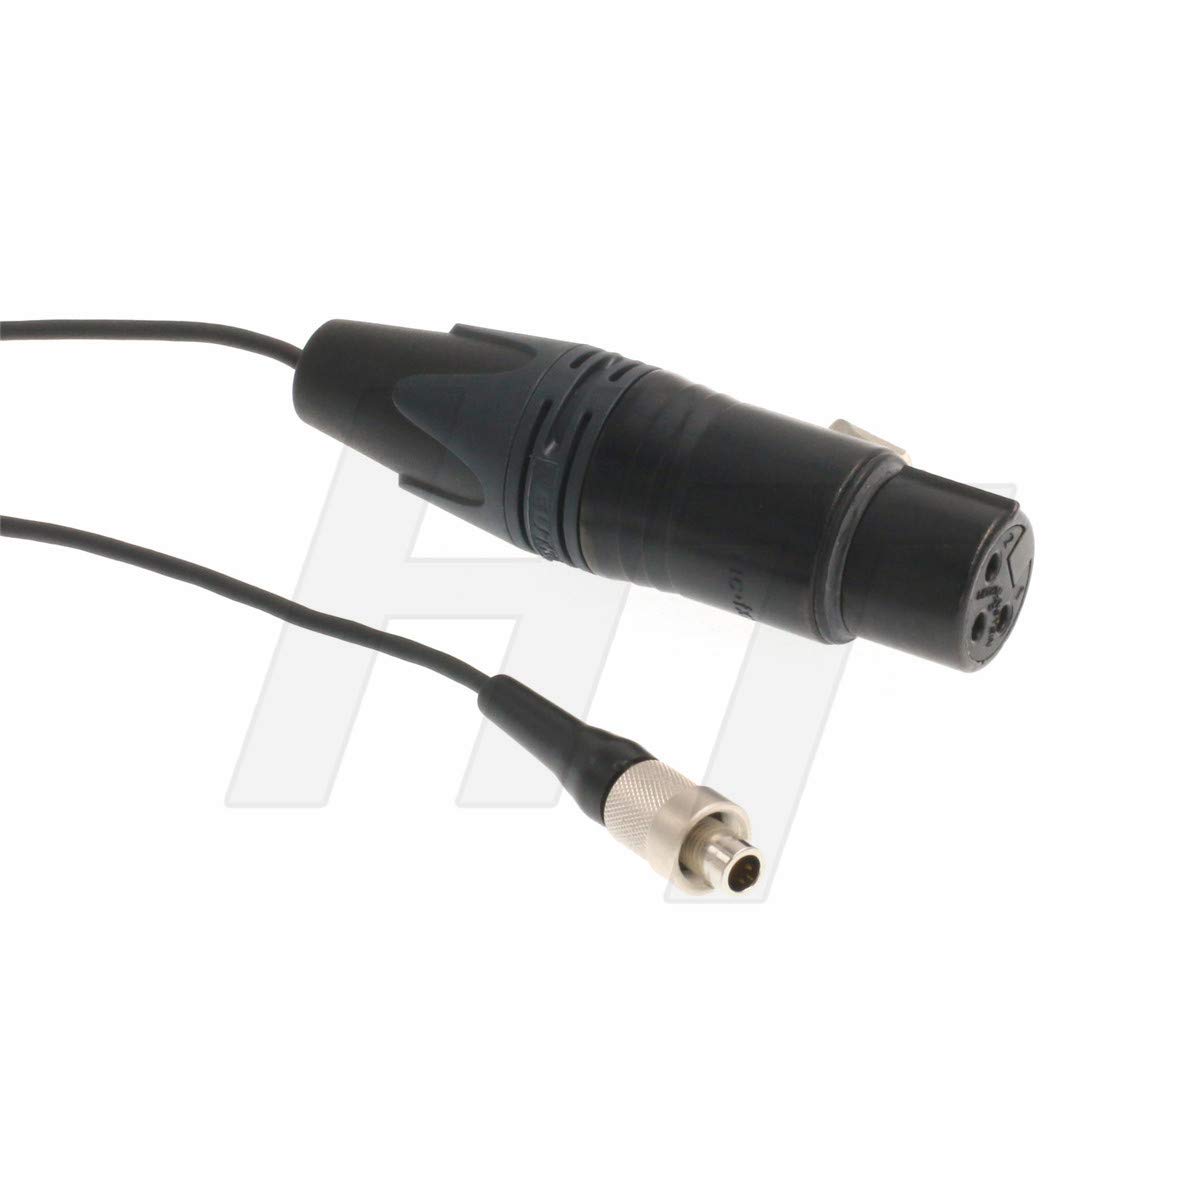 Mikrofon Audio XLR 3 Pin auf FVB 00B 3 Pin Kabel für Sennheiser SK50 SK250 SK2000 Transmitter (30 cm)